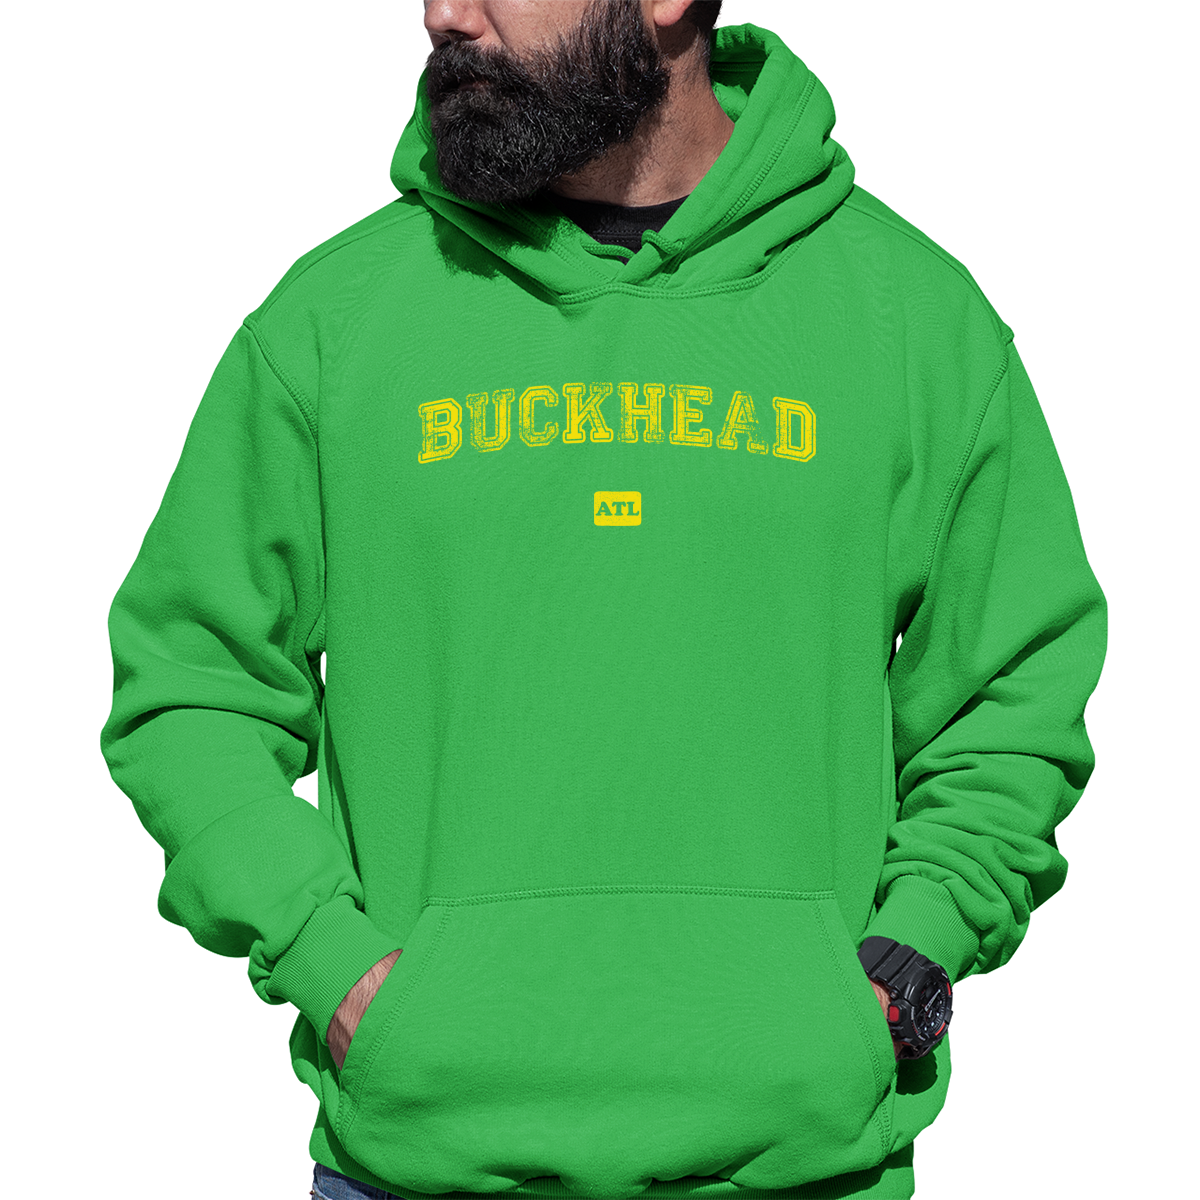 Buckhead ATL Represent Unisex Hoodie | Green